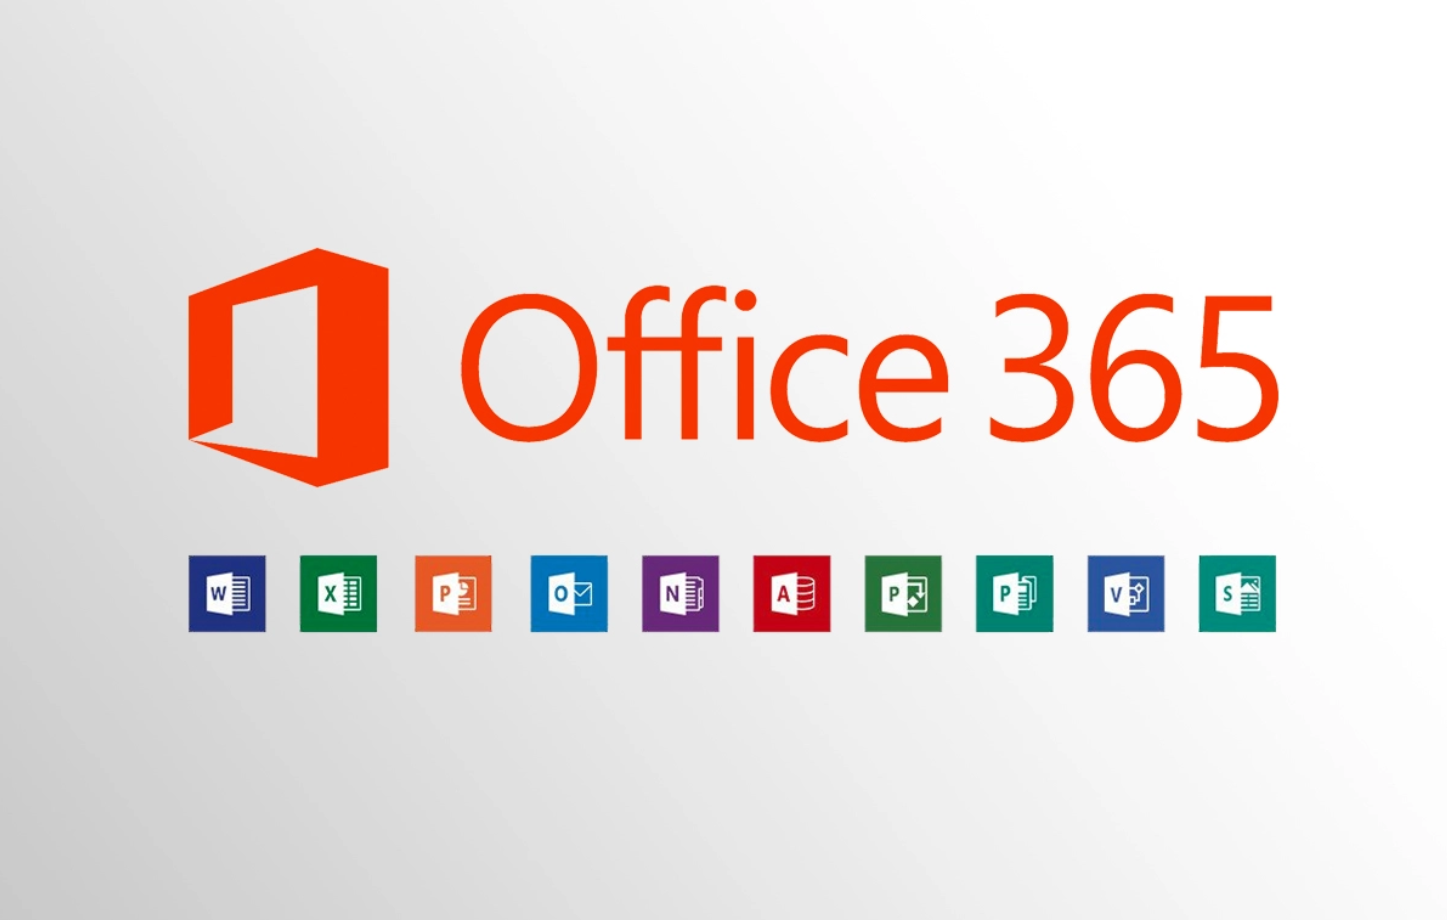 Microsoft Office 2016 (Pro Plus) Free Product Key